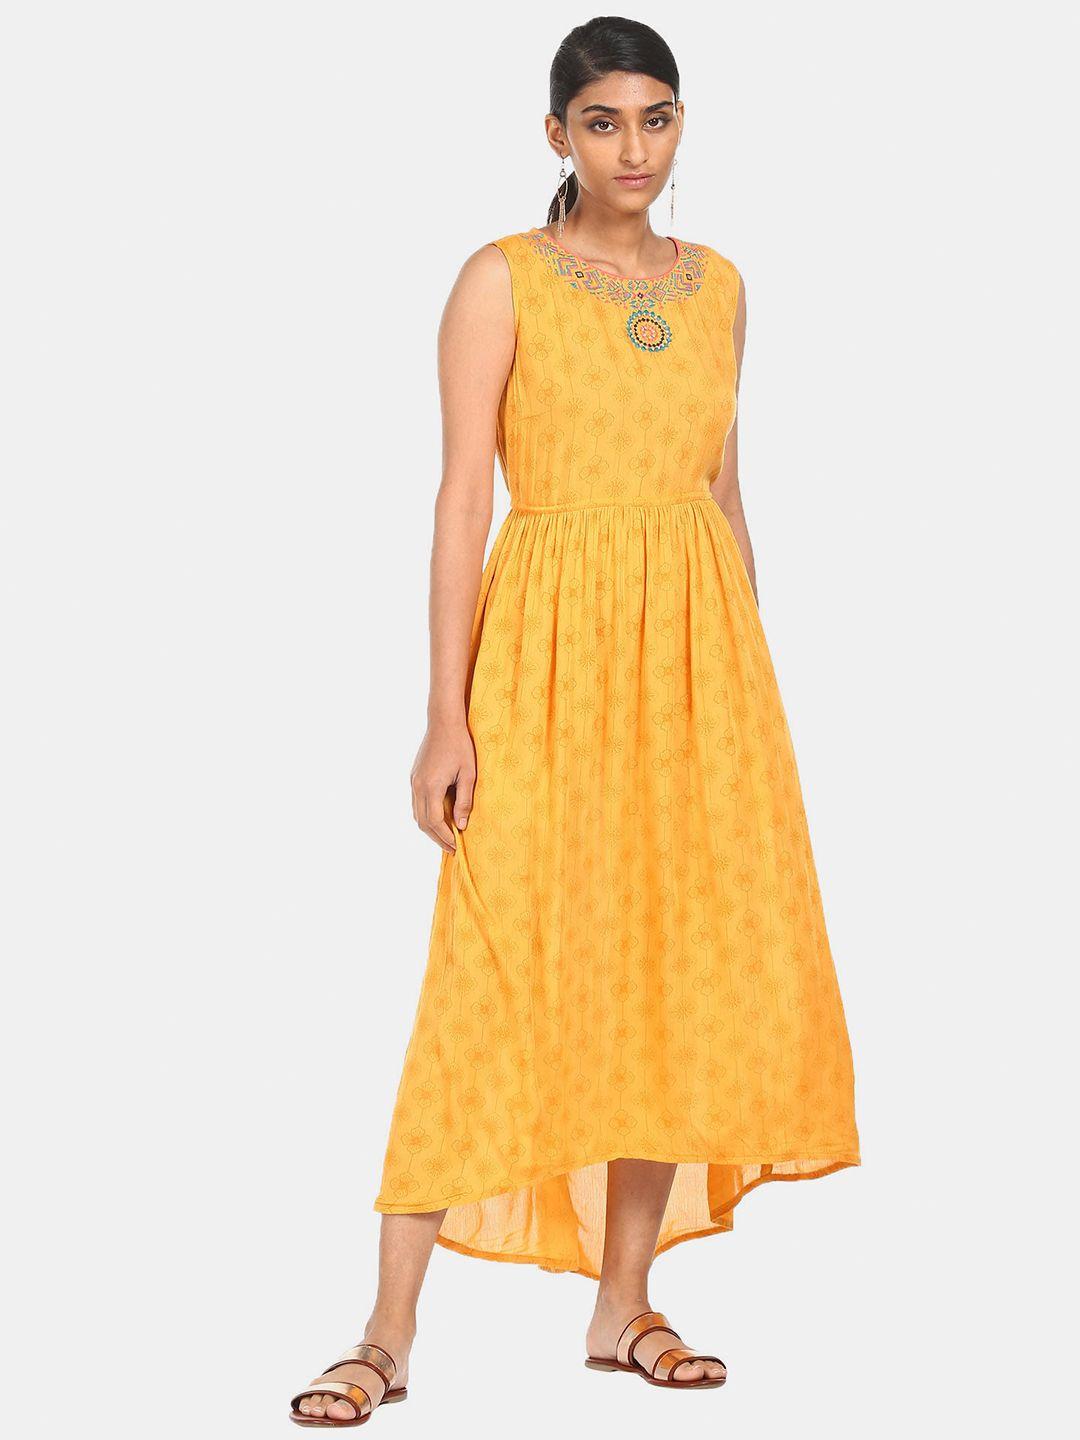 karigari-yellow-ethnic-motifs-embroidered-midi-dress